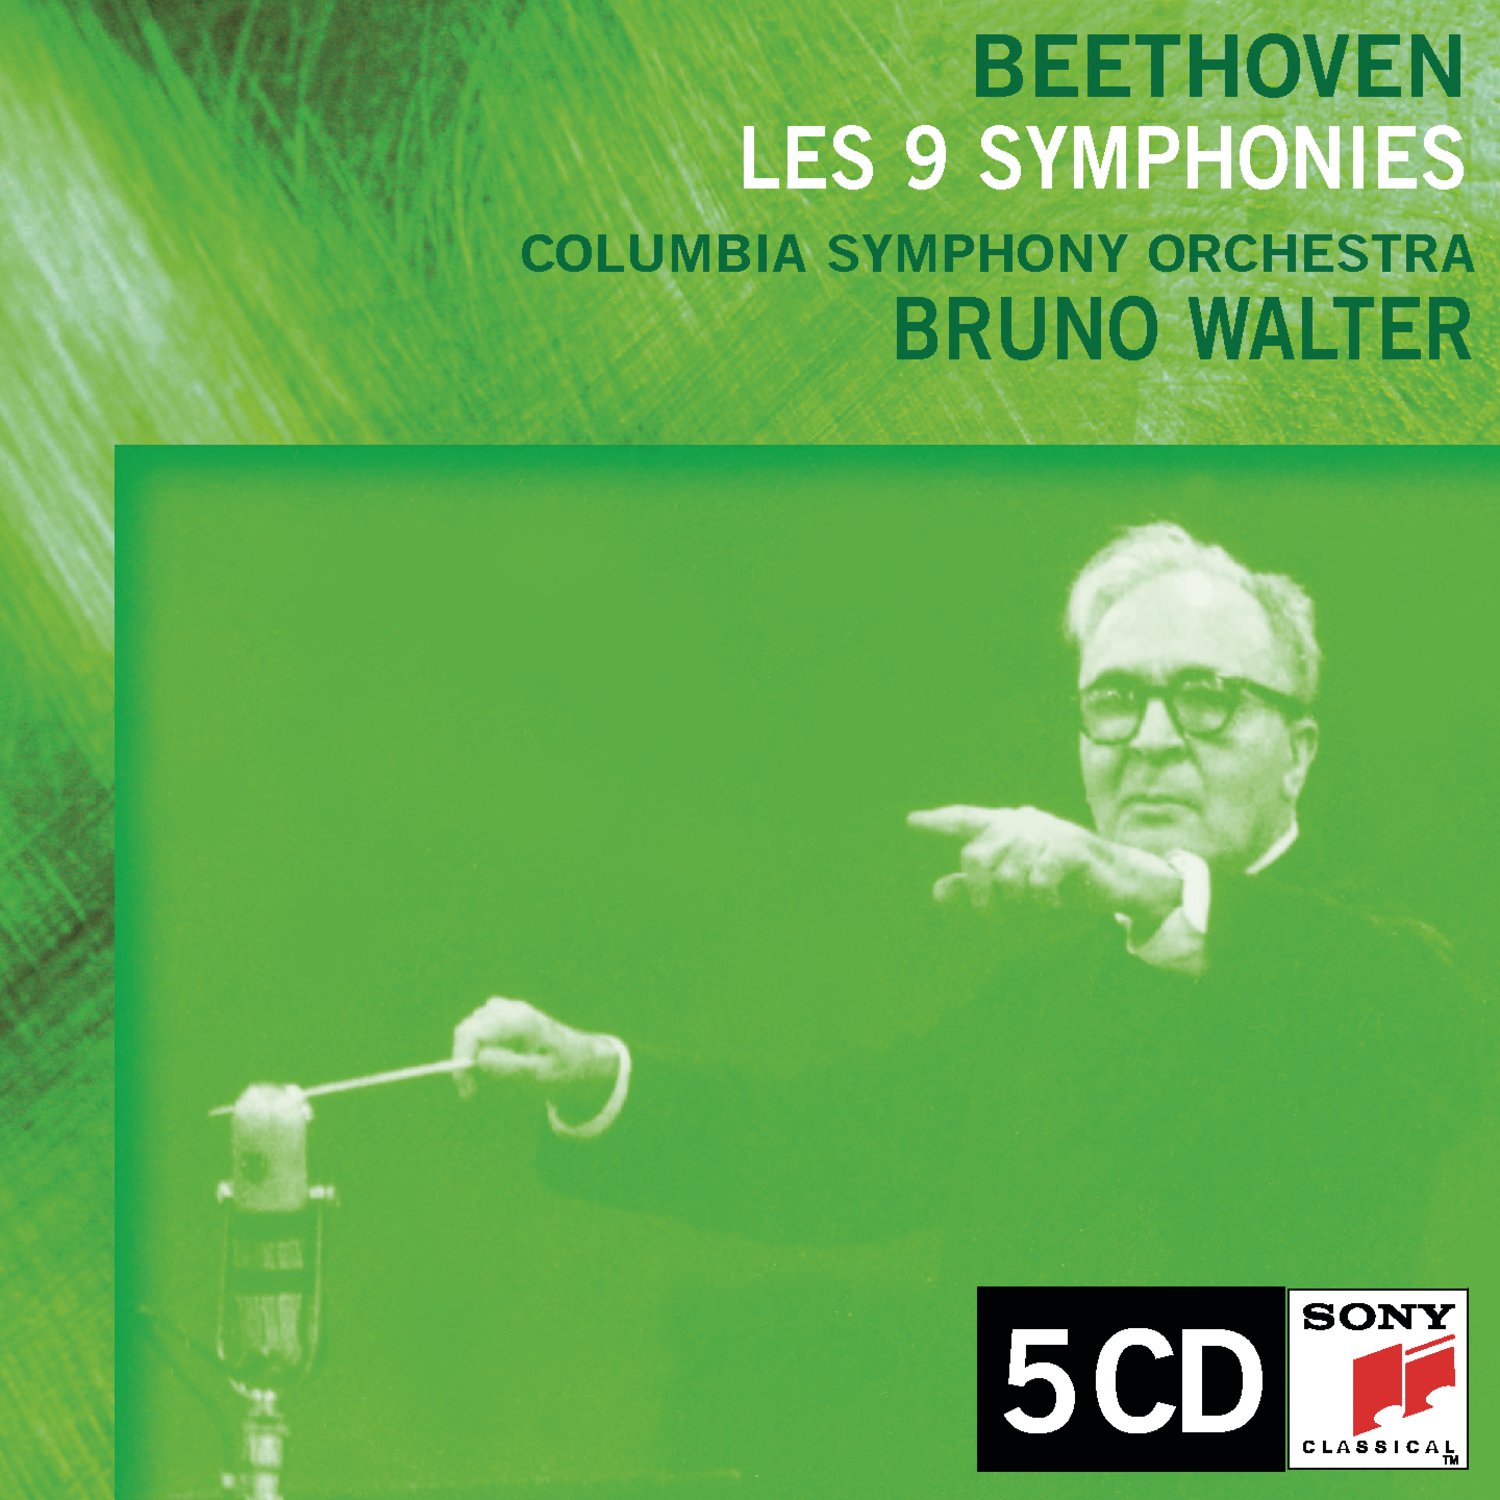 Bruno Walter - Beethoven : Les 9 Symphonies